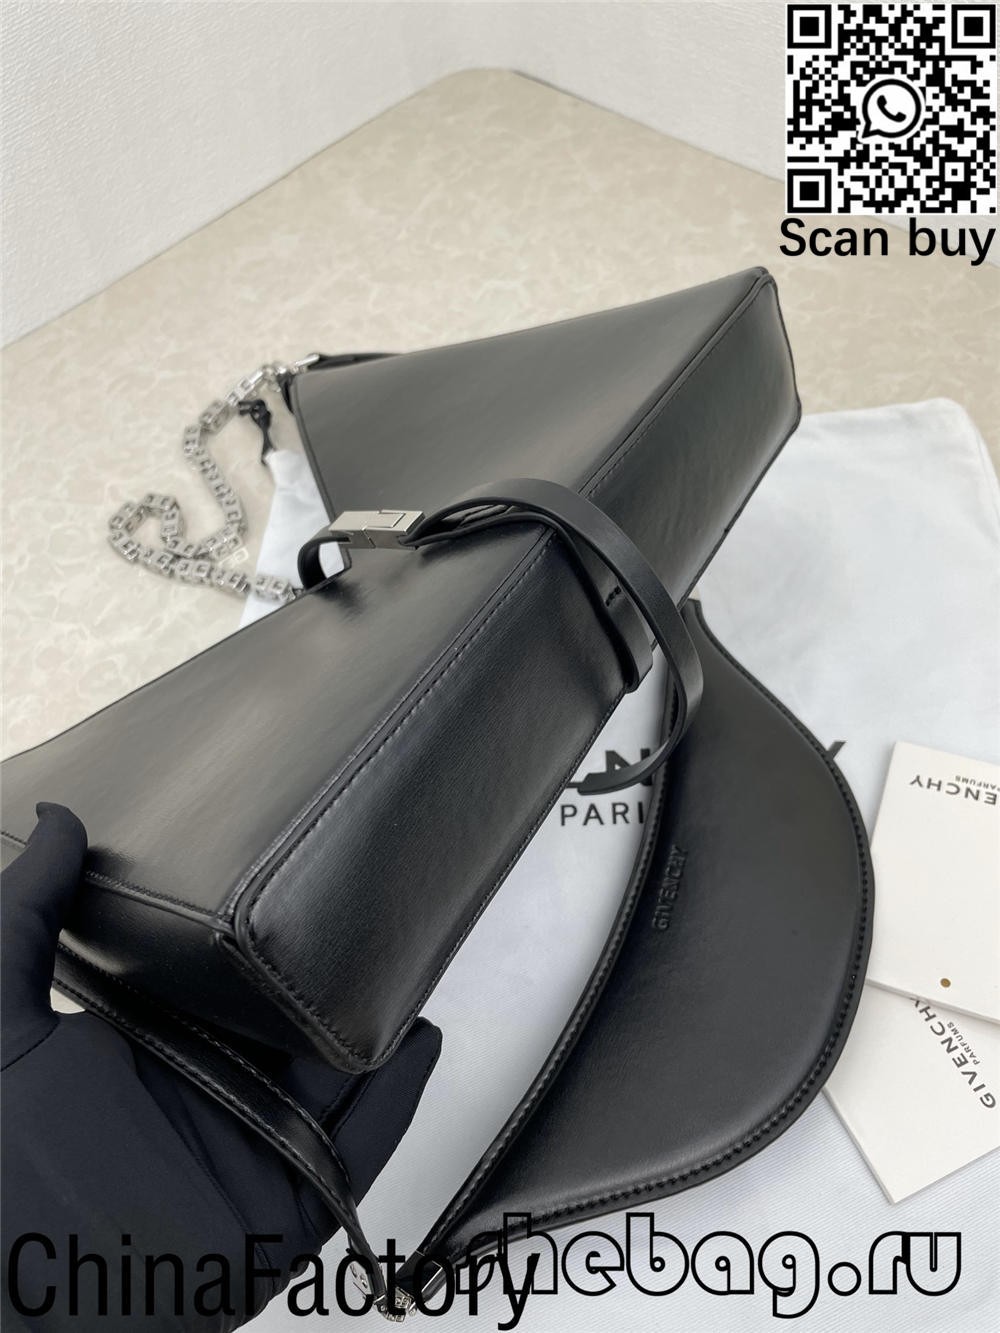 Givenchy svart veske kopi: Givenchy Cut-Out (2022 oppdatert)-Best Quality Fake Louis Vuitton Bag Nettbutikk, Replica designer bag ru